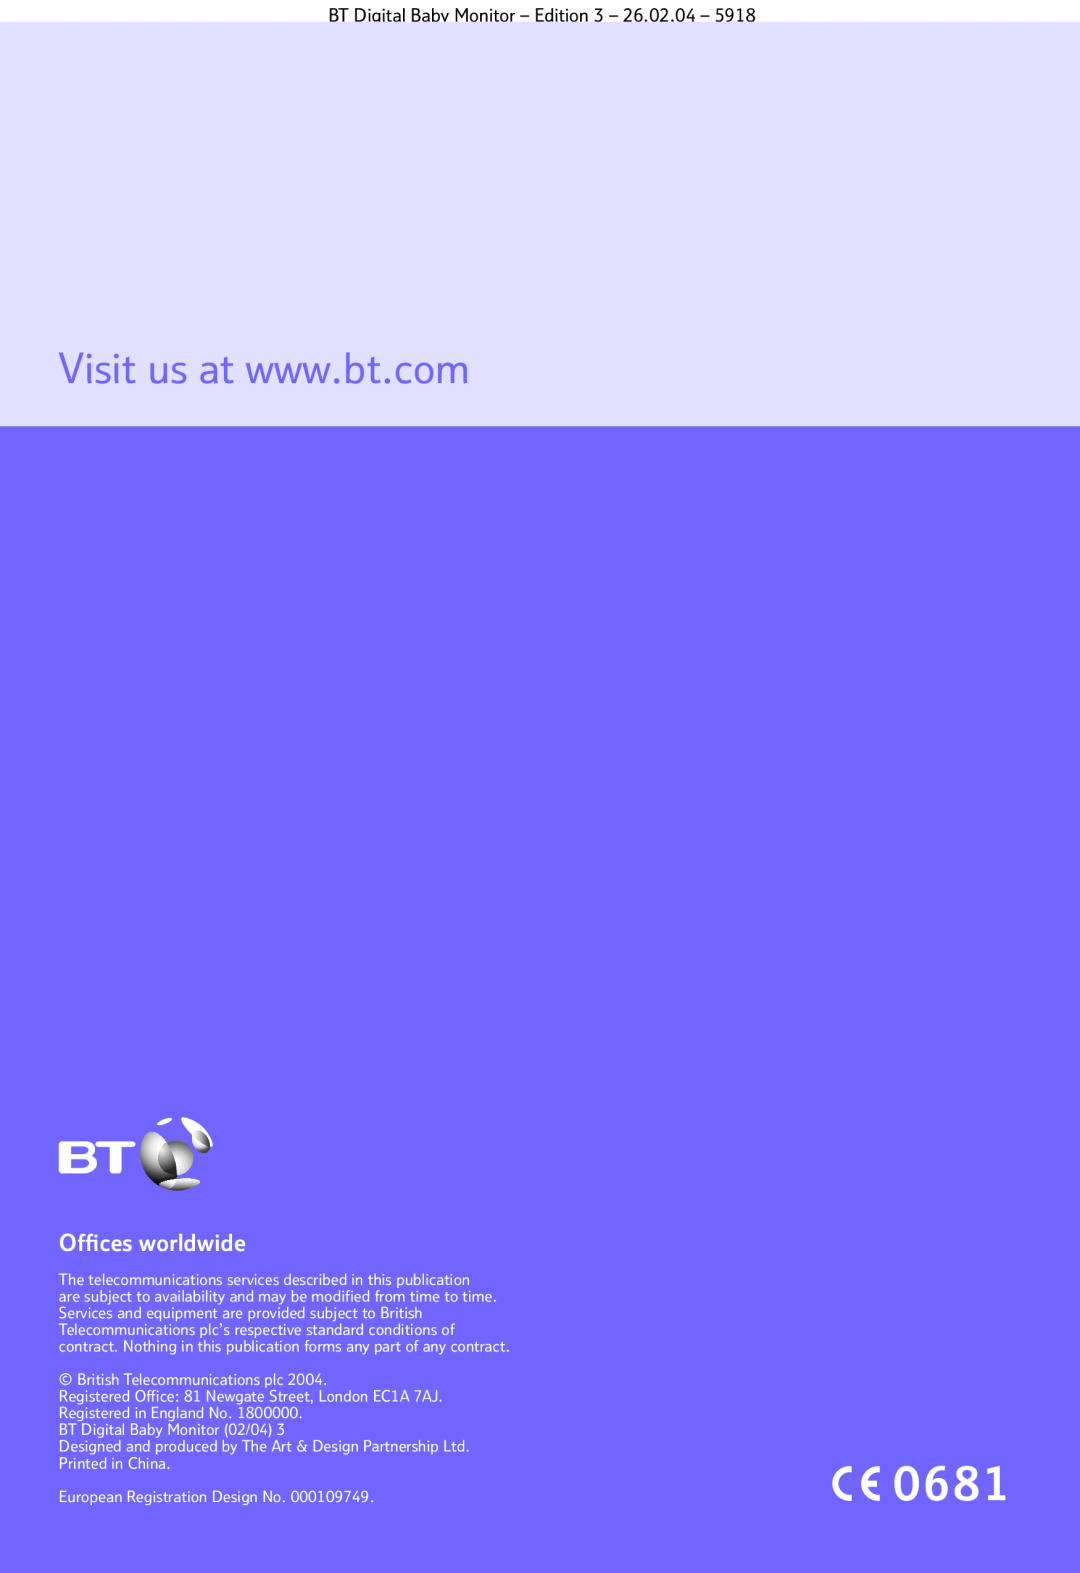 BT manual 0681, Ofﬁces worldwide, BT Digital Baby Monitor - Edition 3 - 26.02.04, British Telecommunications plc 